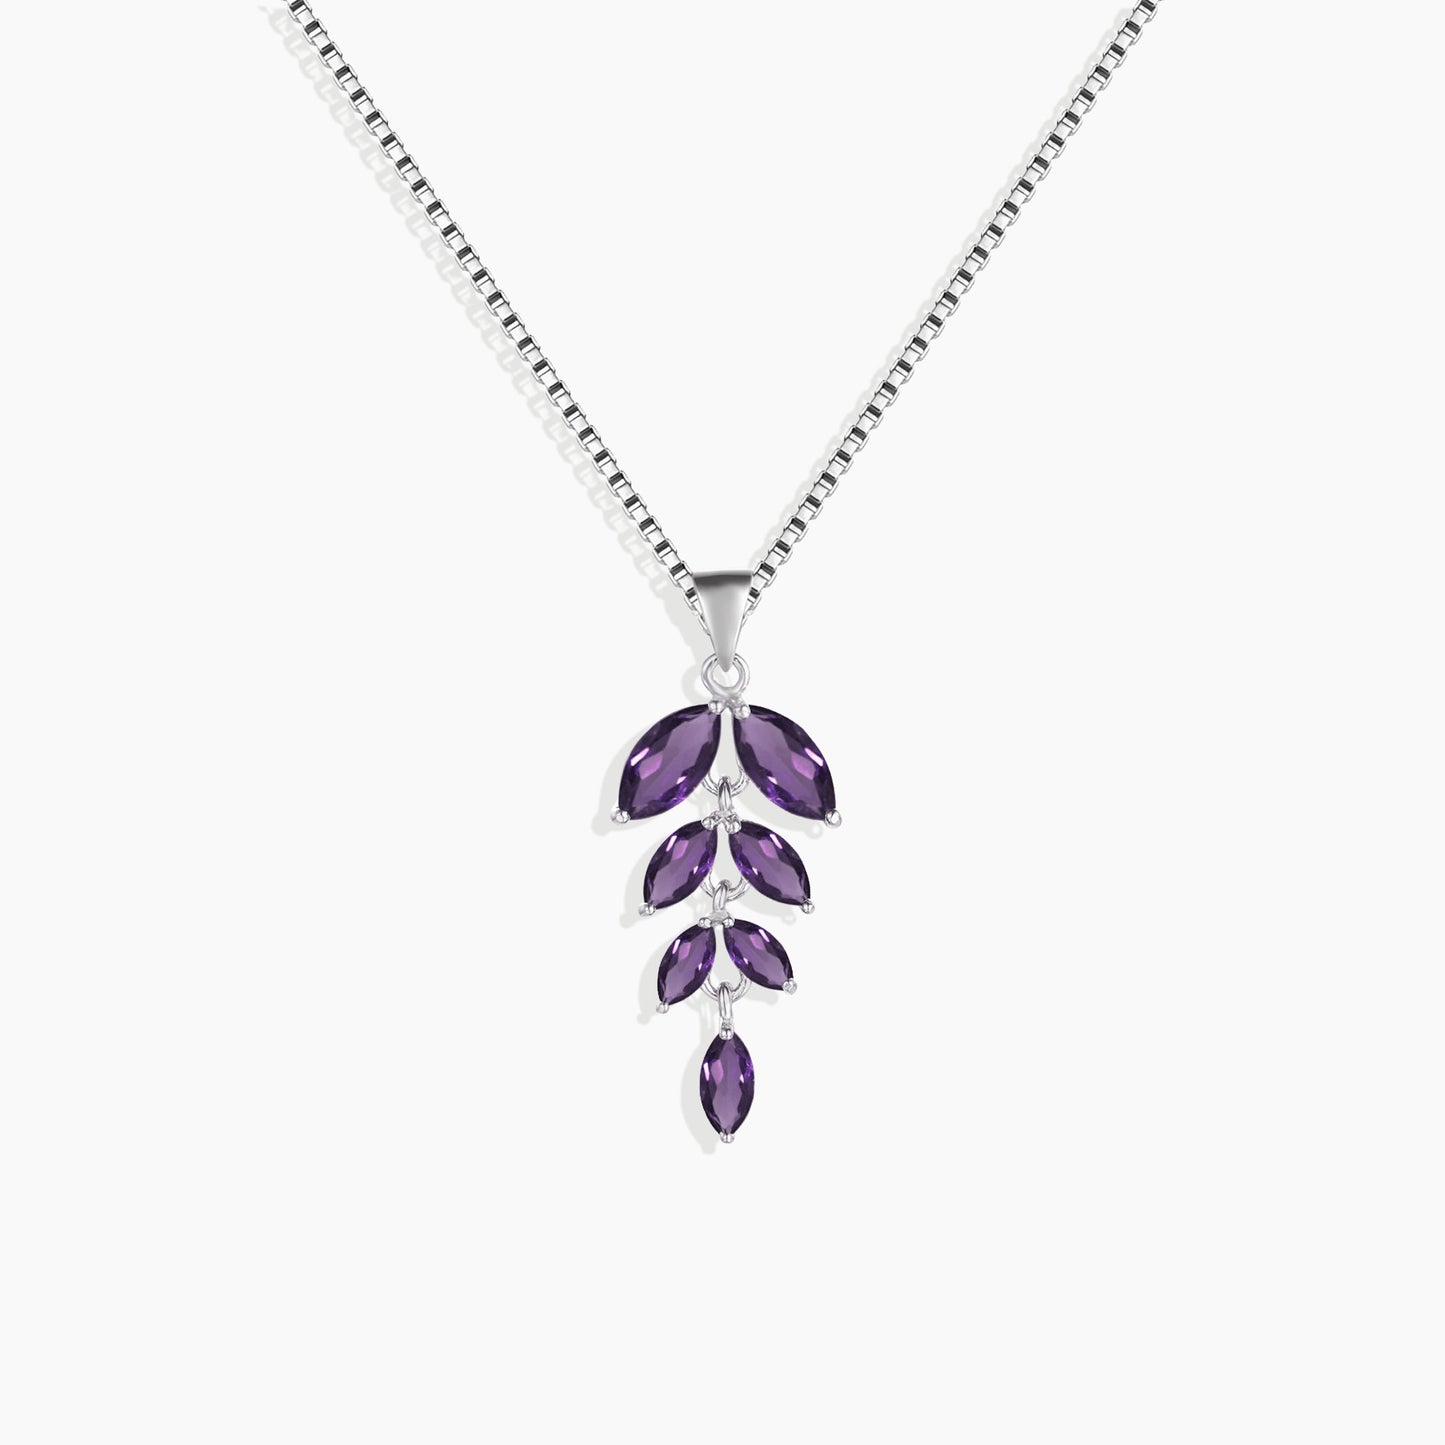 Amethyst Leaf Pendant Necklace in Sterling Silver